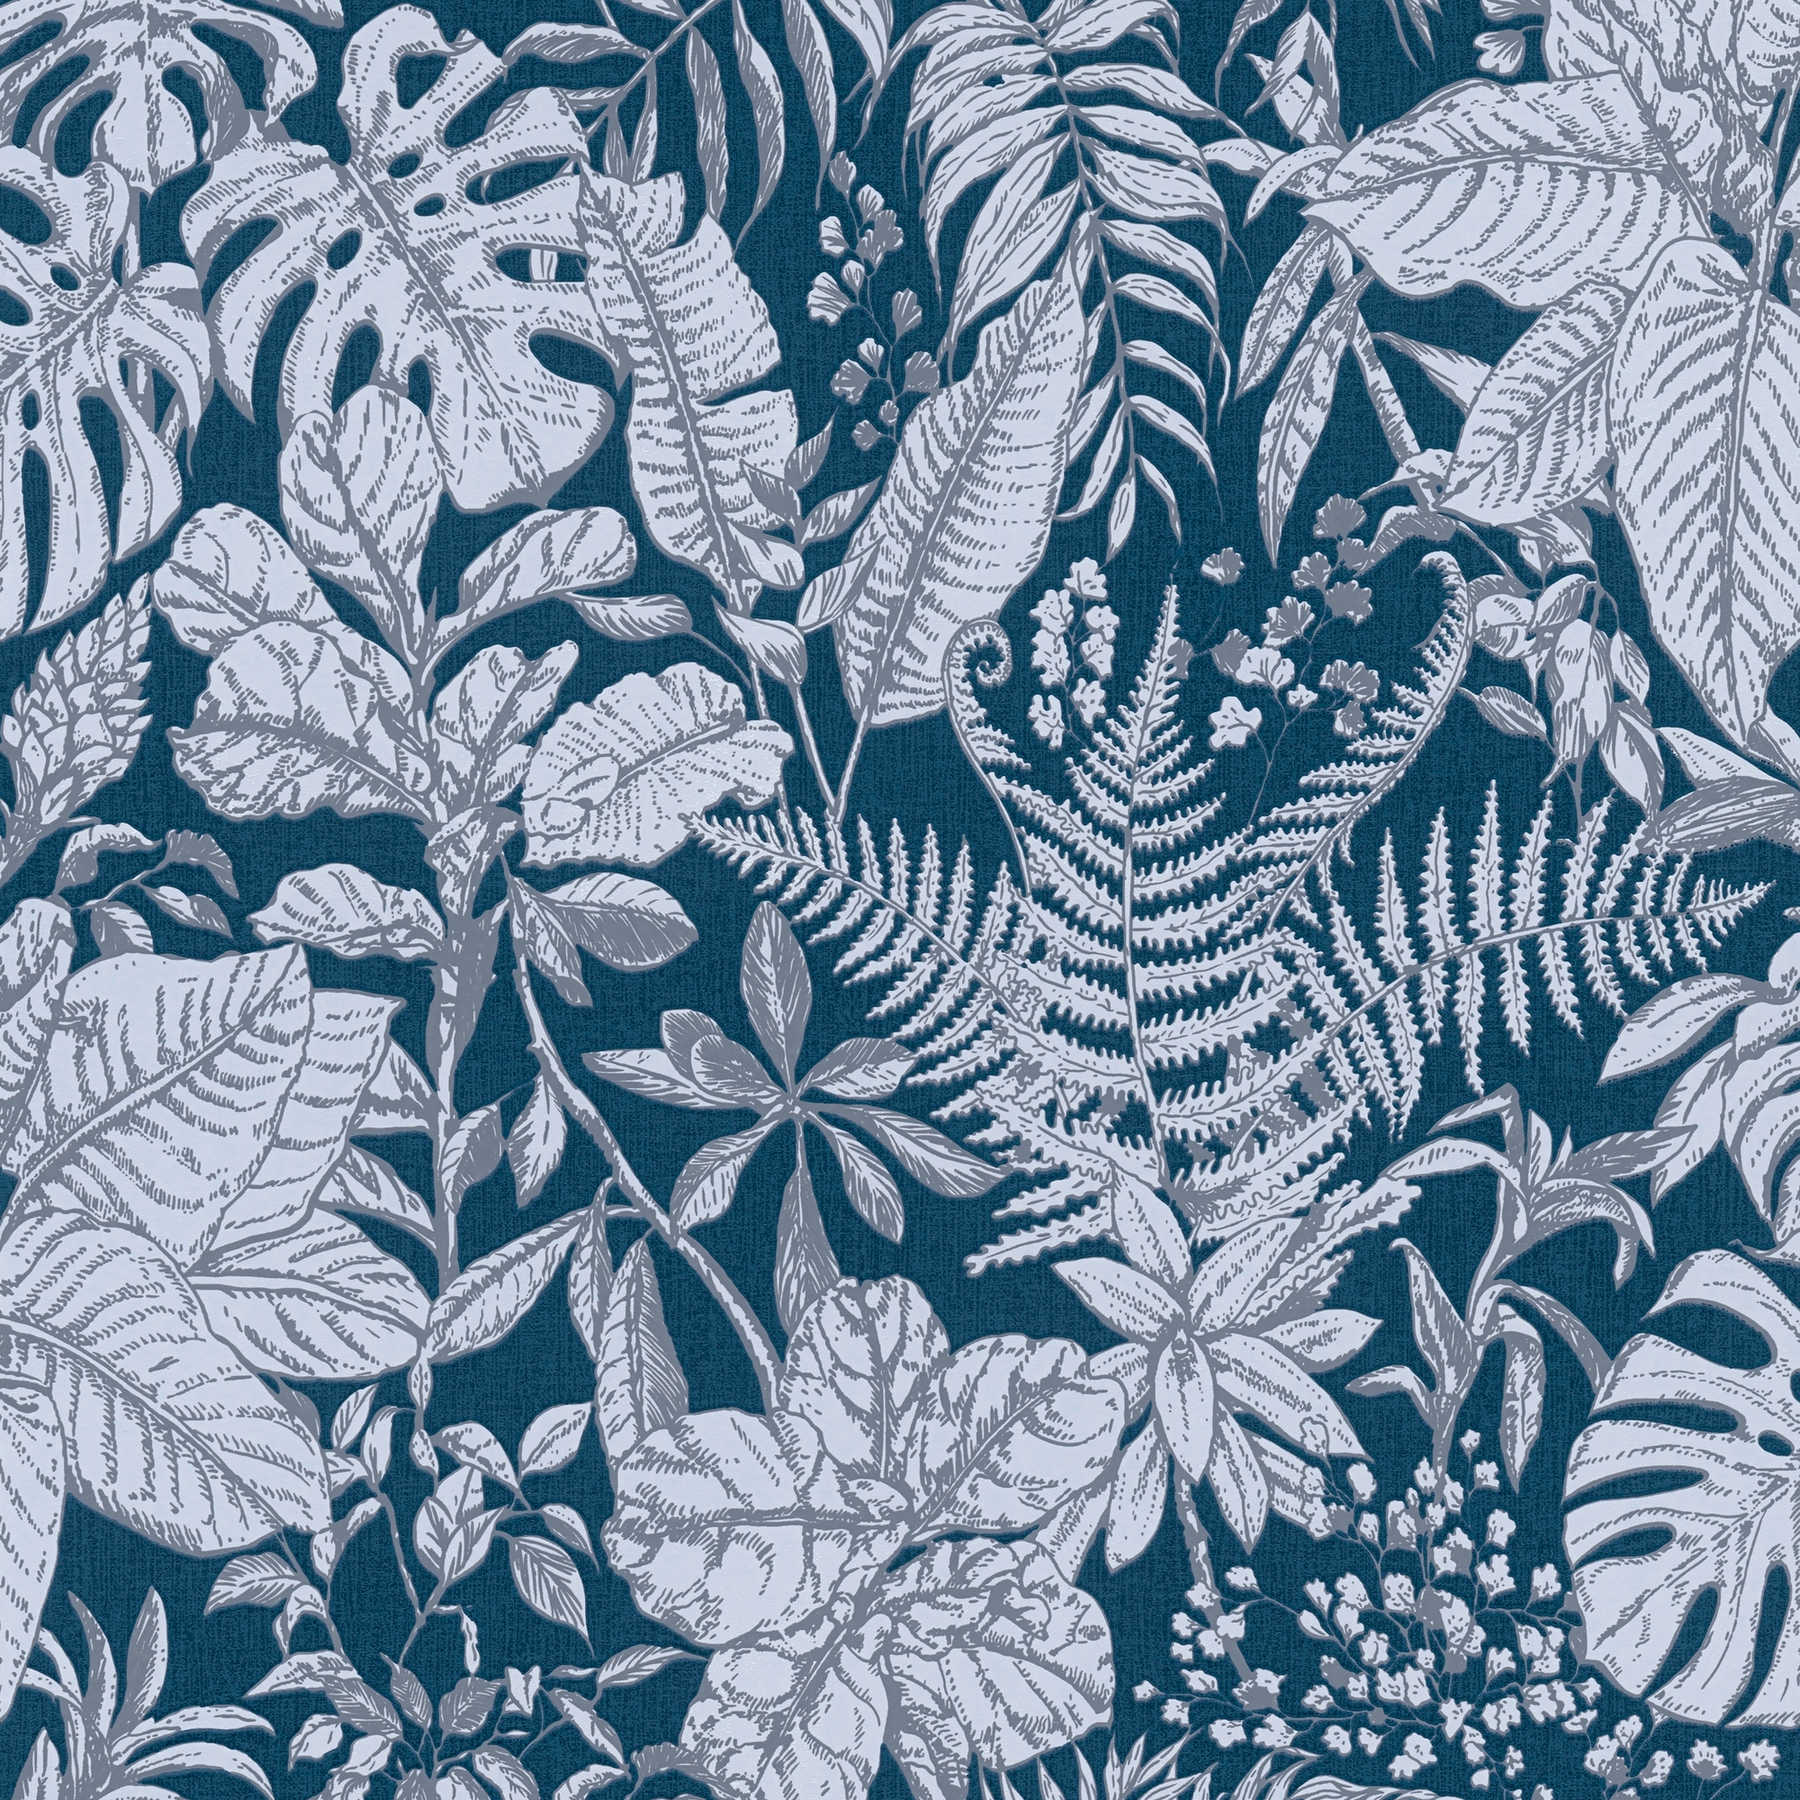 Mustertapete Dschungel Blätter & Farne – Blau, Grau, Weiß
